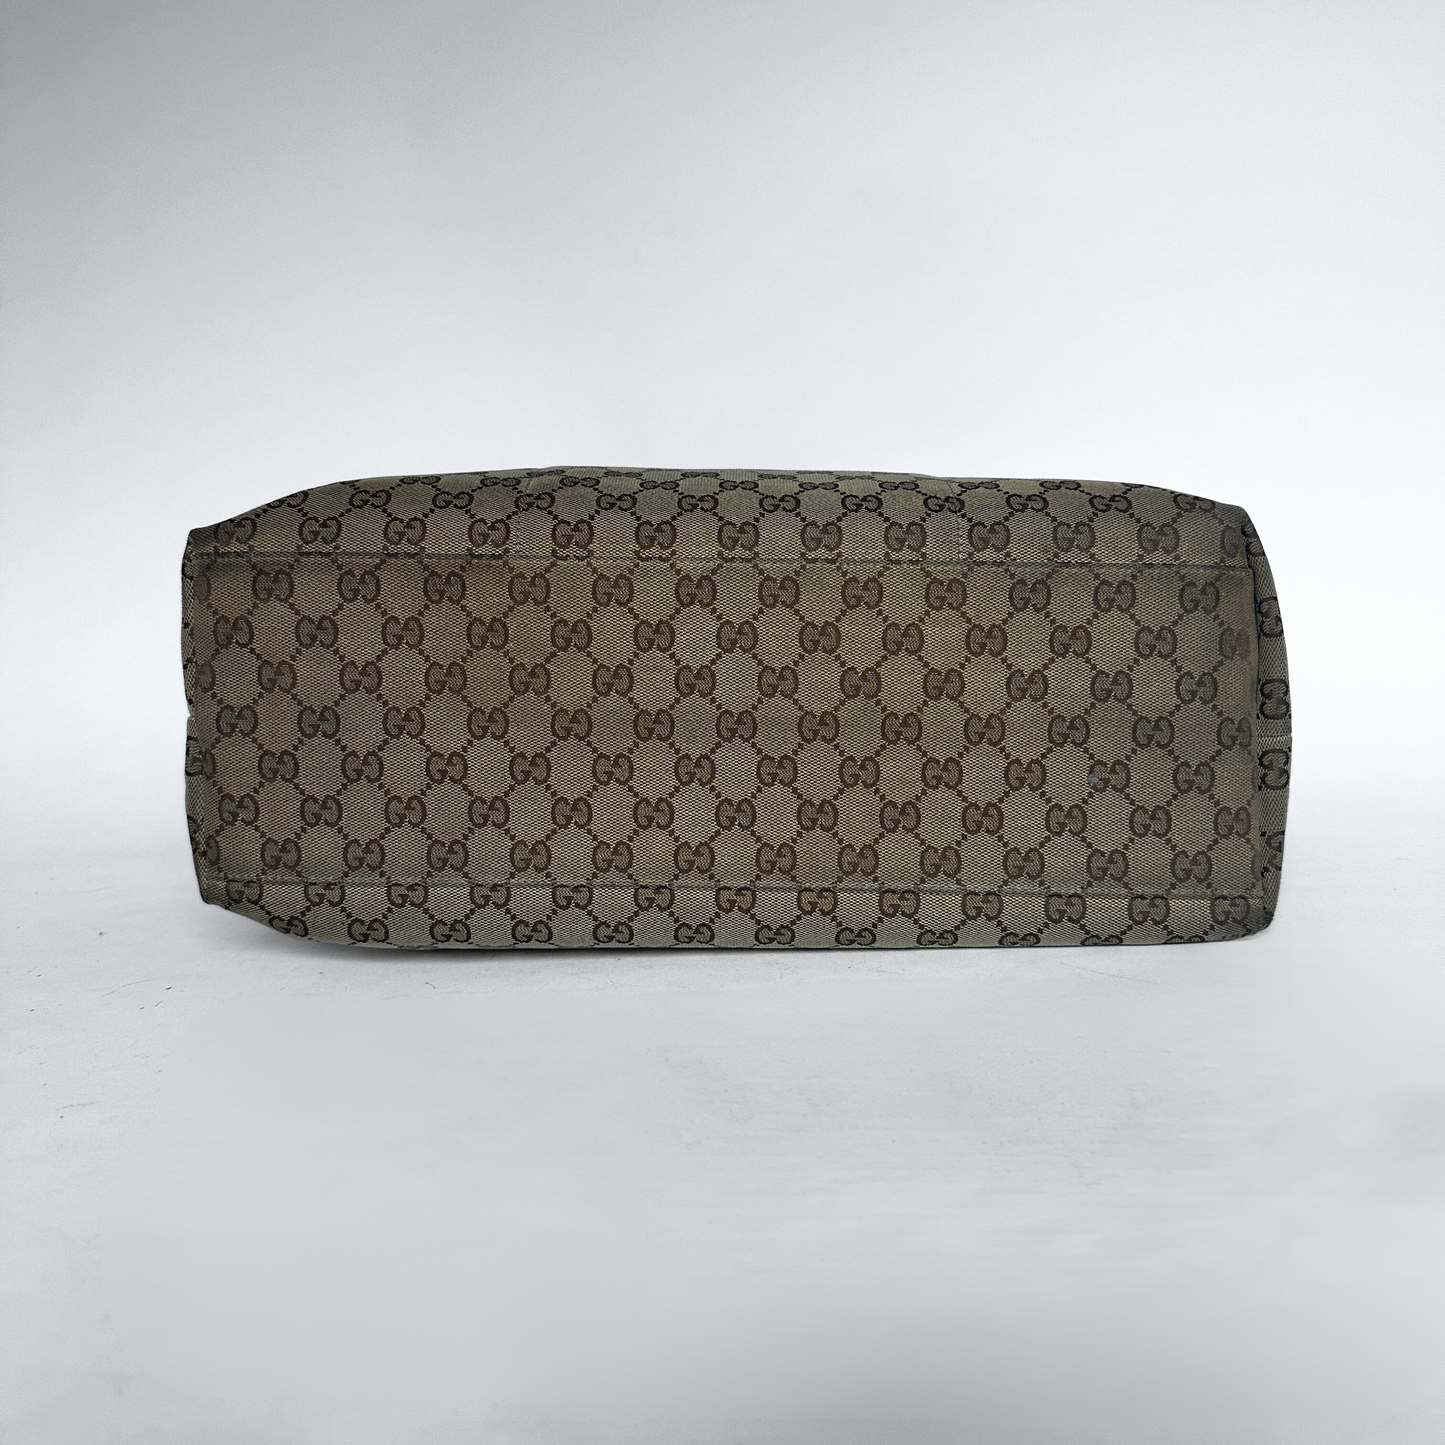 Gucci Gucci Shopper Monogram Canvas - Handtasche - Etoile Luxury Vintage